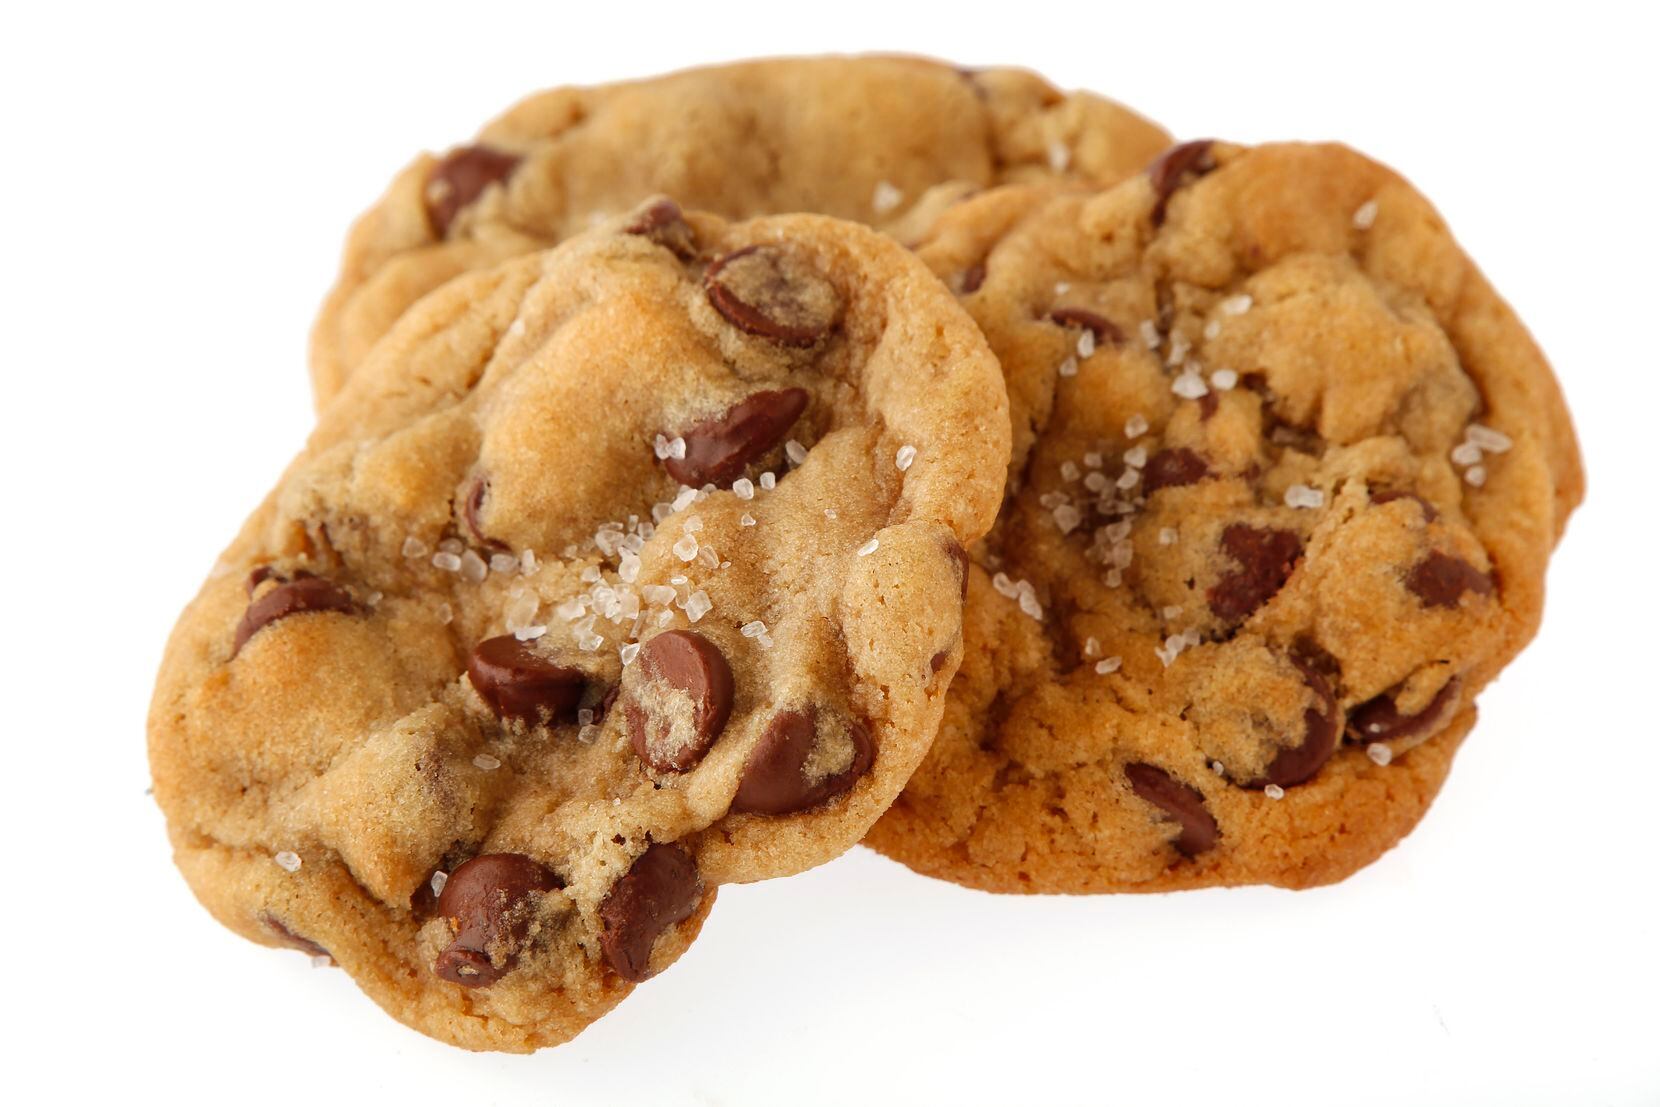 Cookie dough on the go: Local entrepreneur creates new snack bar